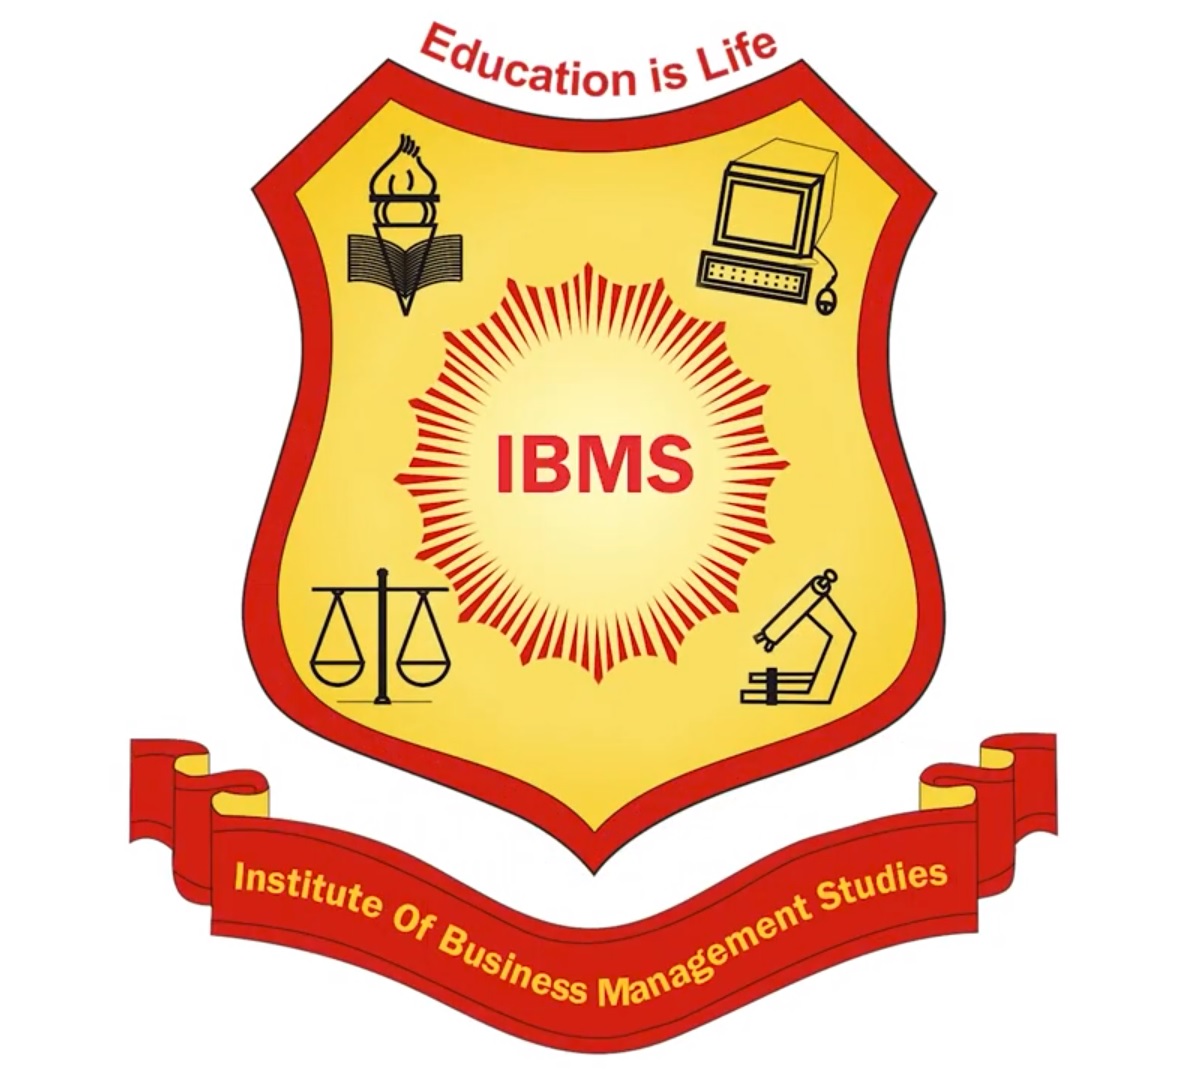 IBMS INSTITUTE OF BUSINESS MANAGEMENT STUDIES